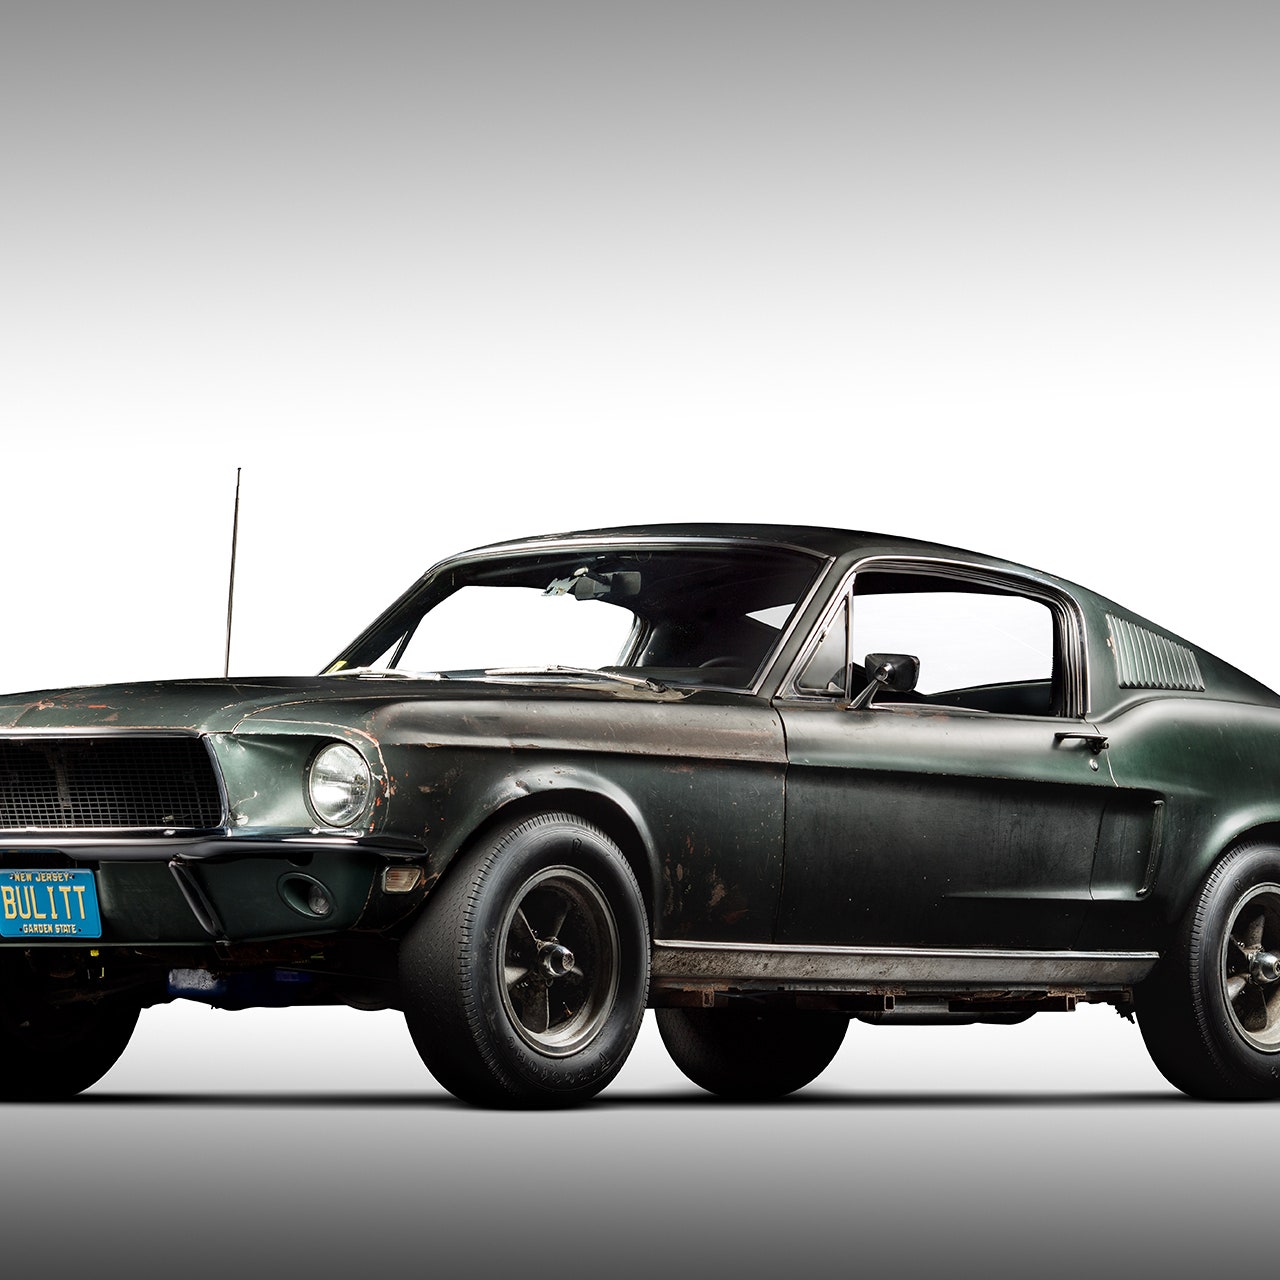 We tracked down the original Bullitt Mustang